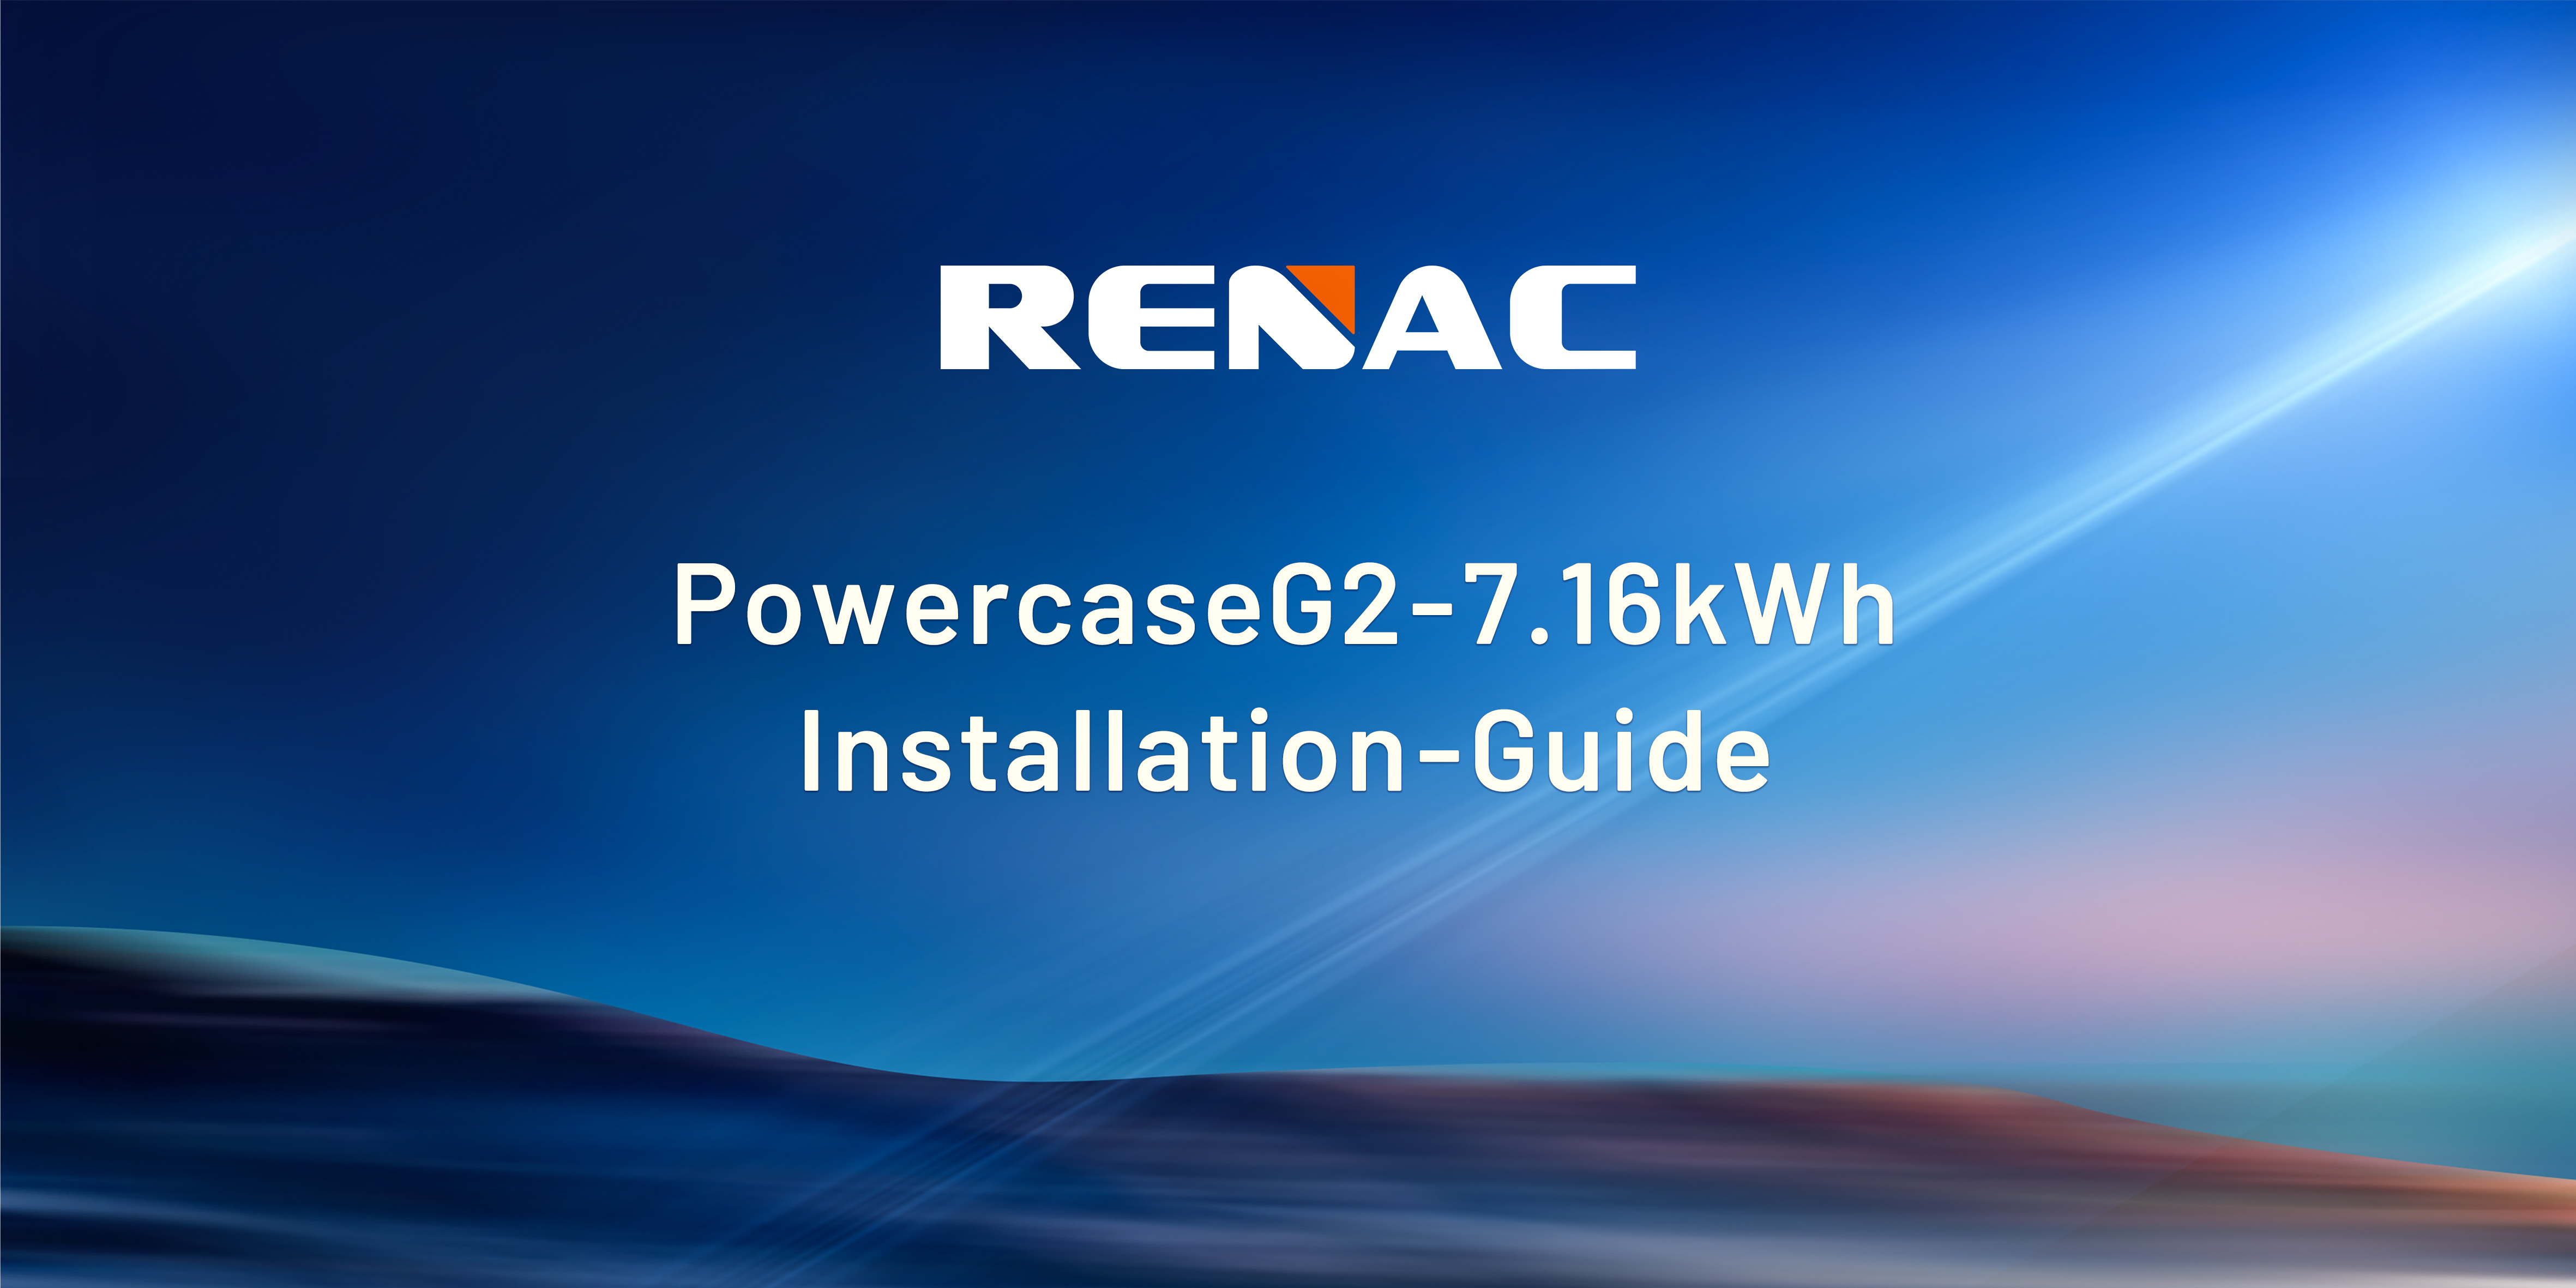 PowercaseG2-7.16kWh Installation-Guide